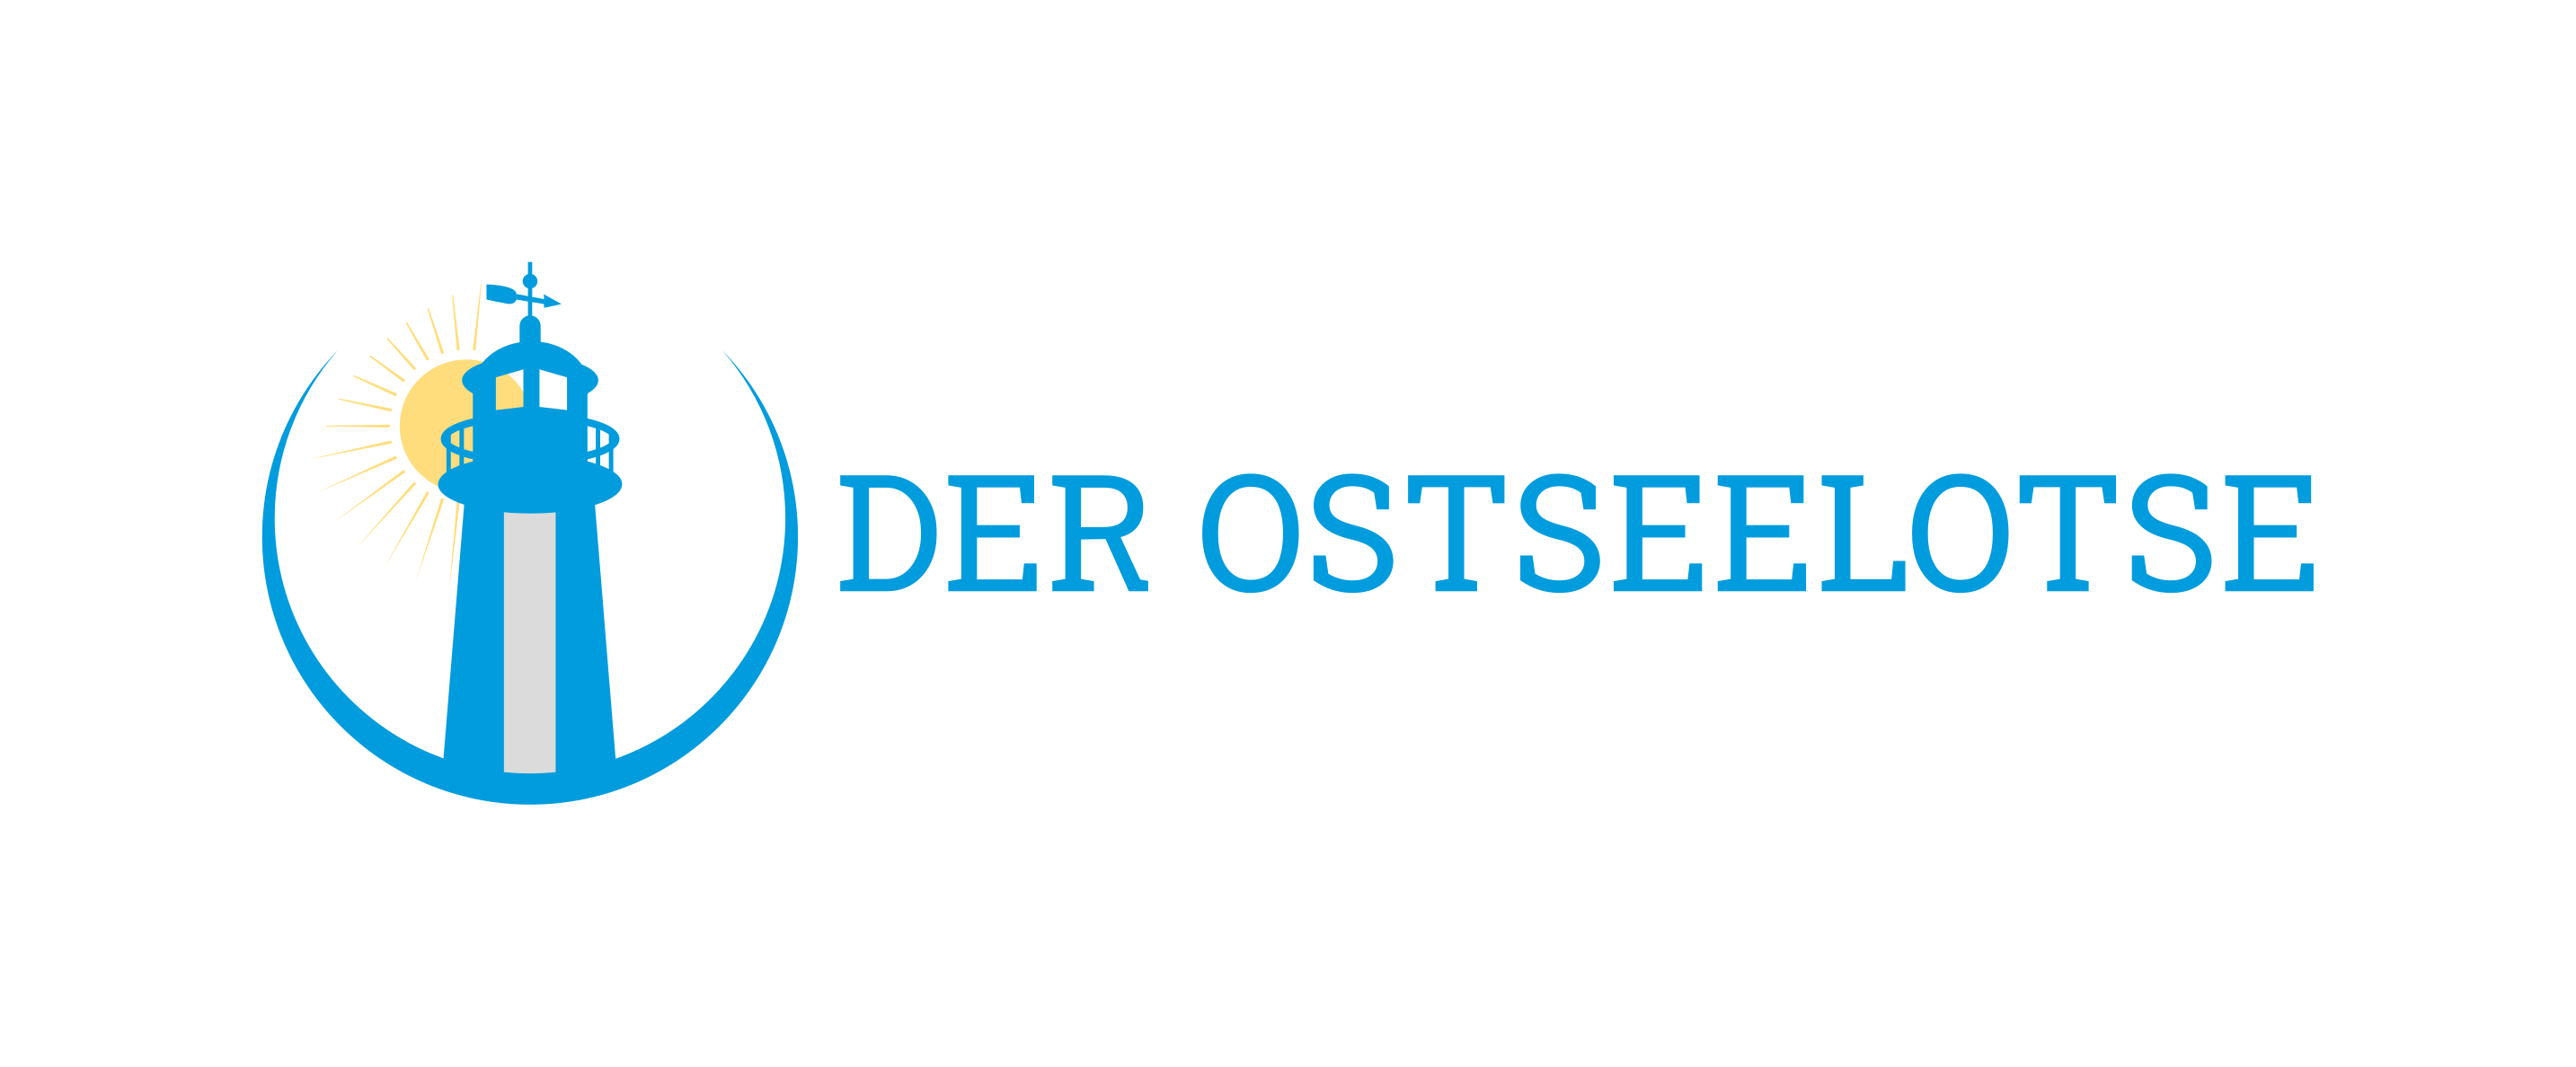 Der Ostseelotse Logo